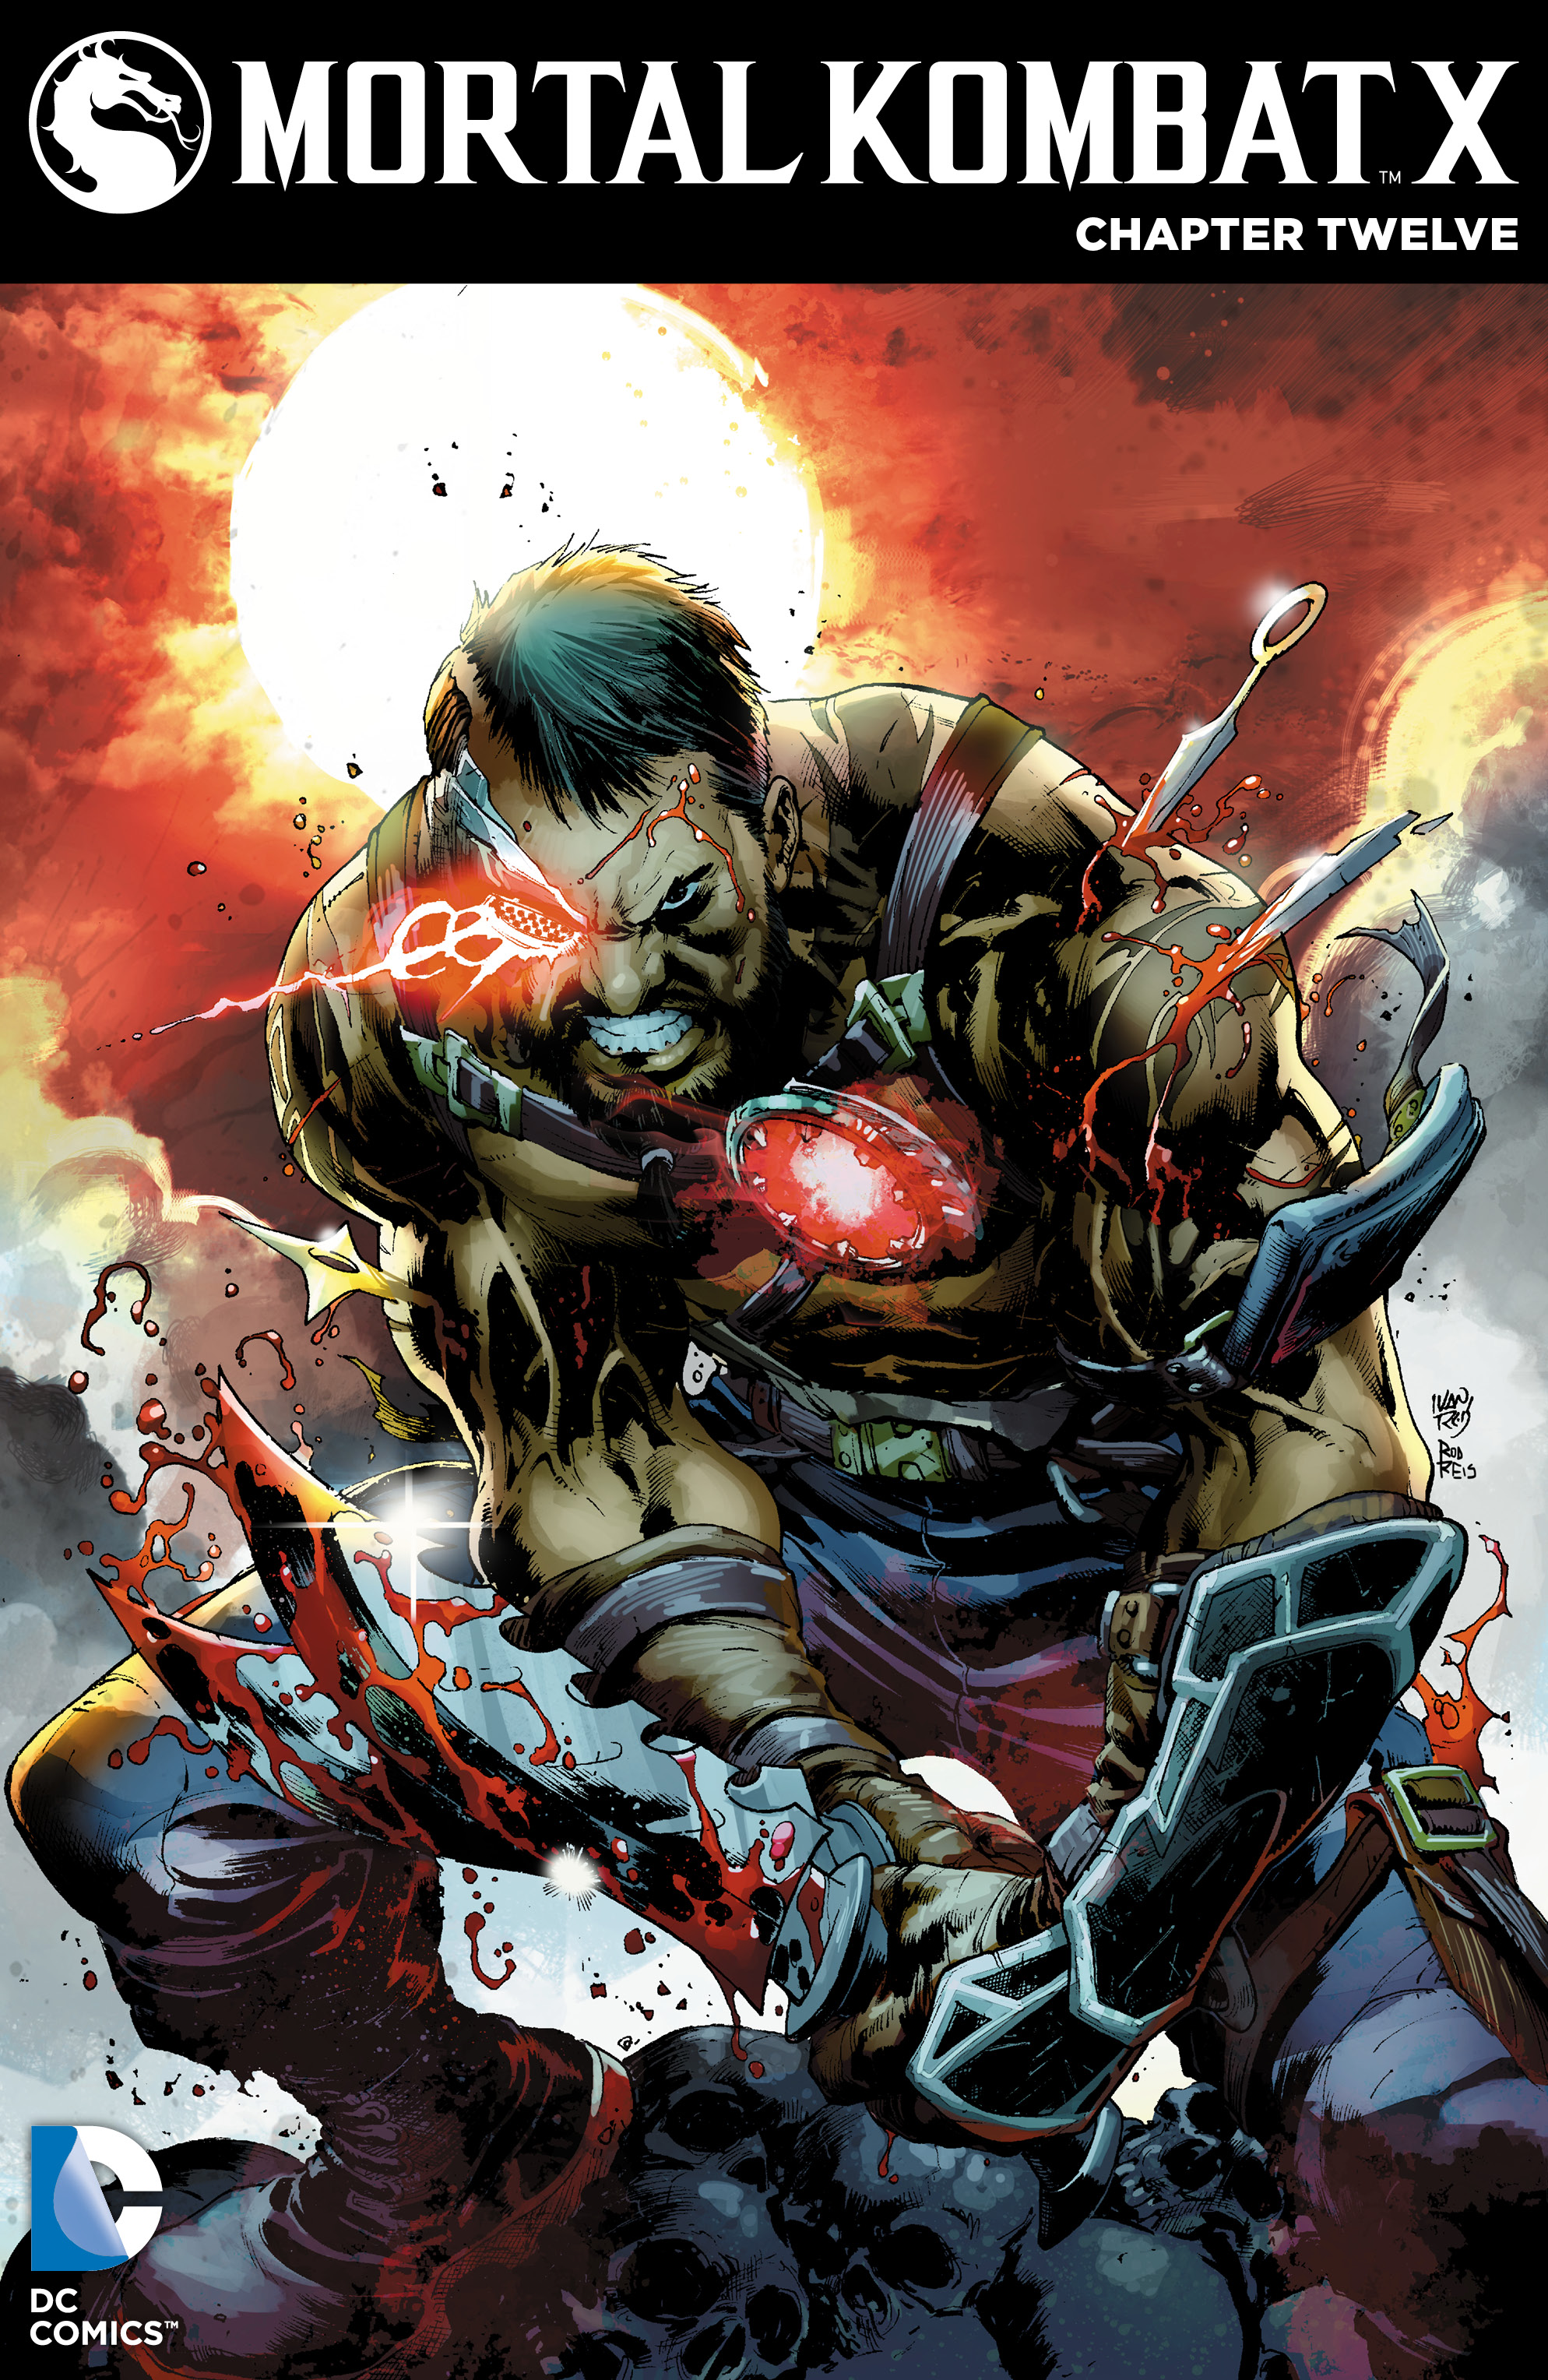 Mortal Kombat X #12 preview images